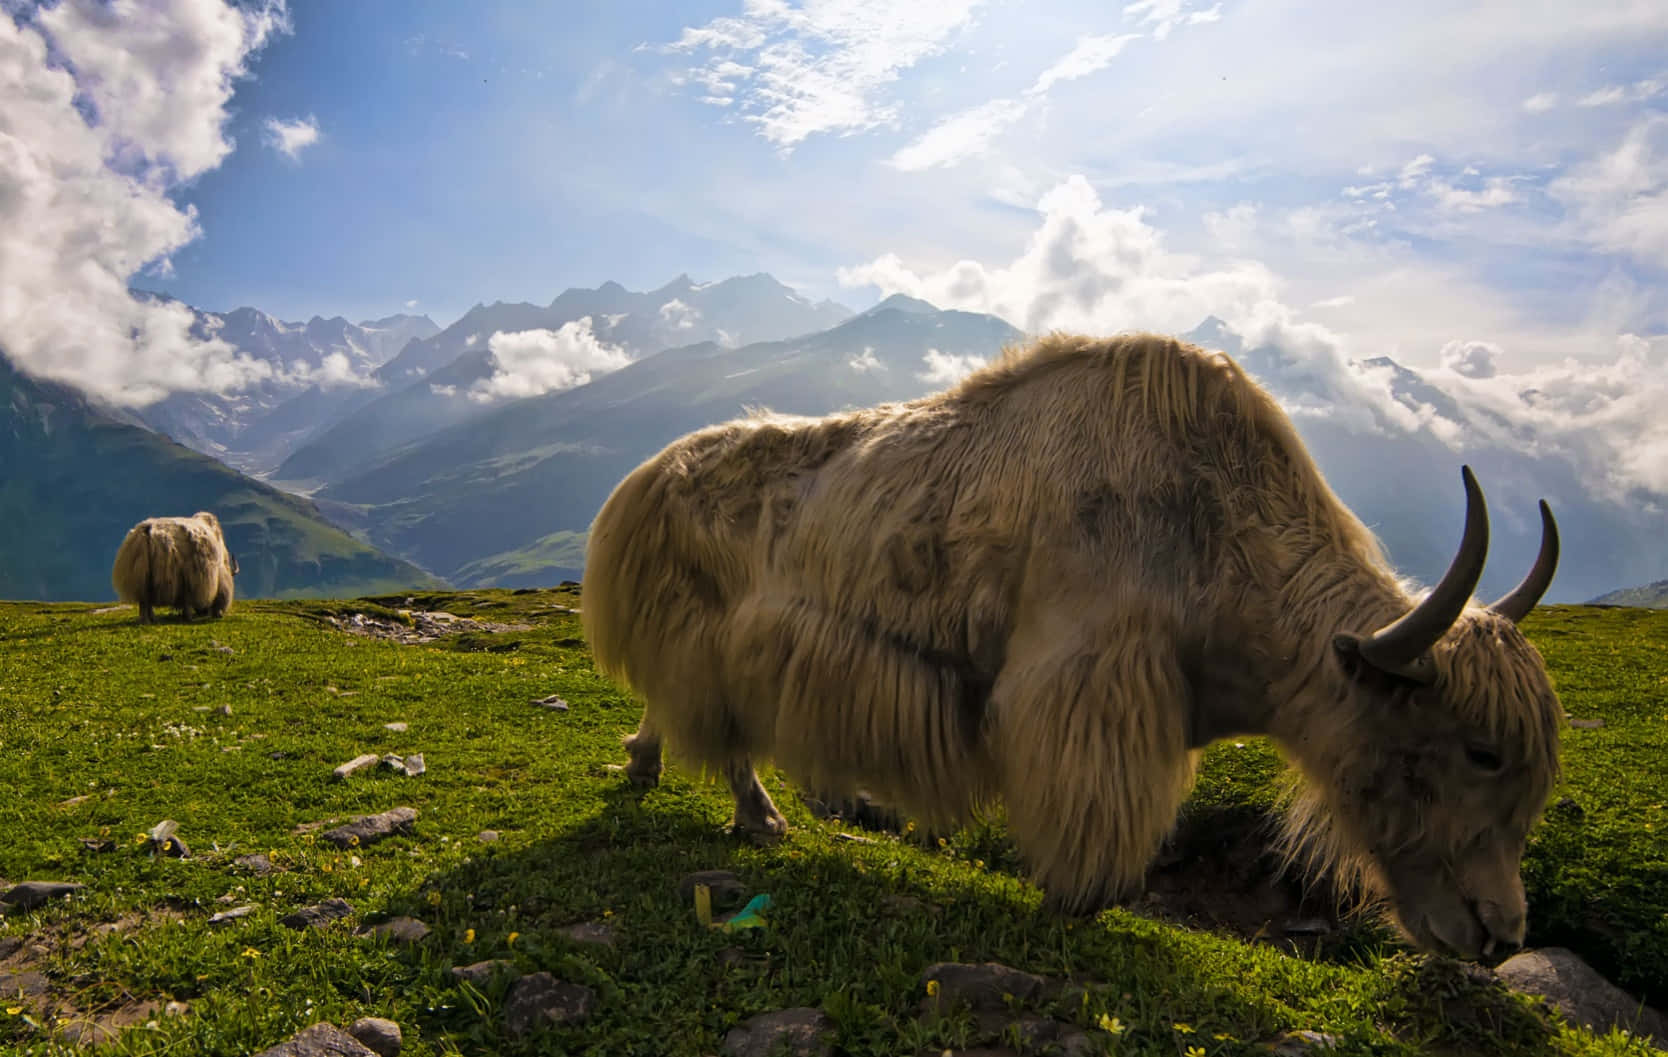 A yak grazing in a mountain meadow